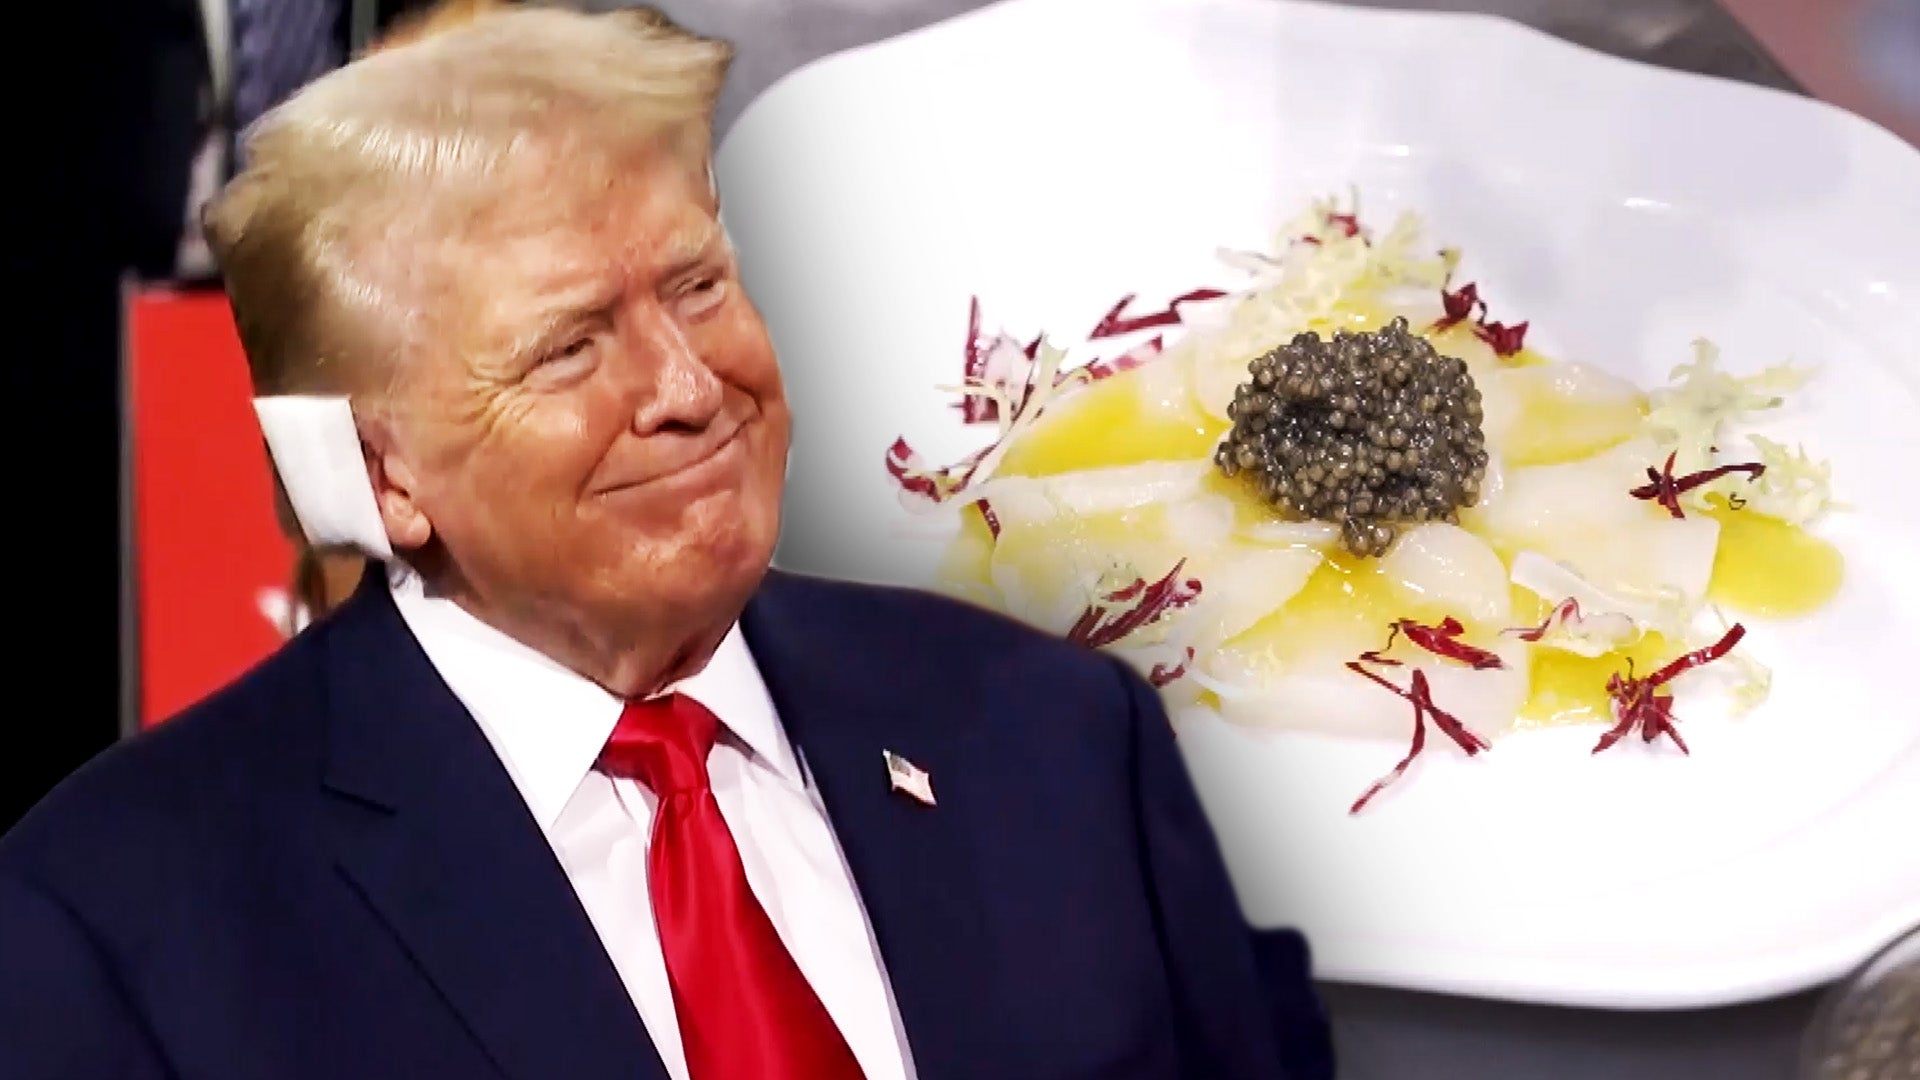 Split image: Donald Trump with ear bandage/plate haute cuisine scallops and caviar